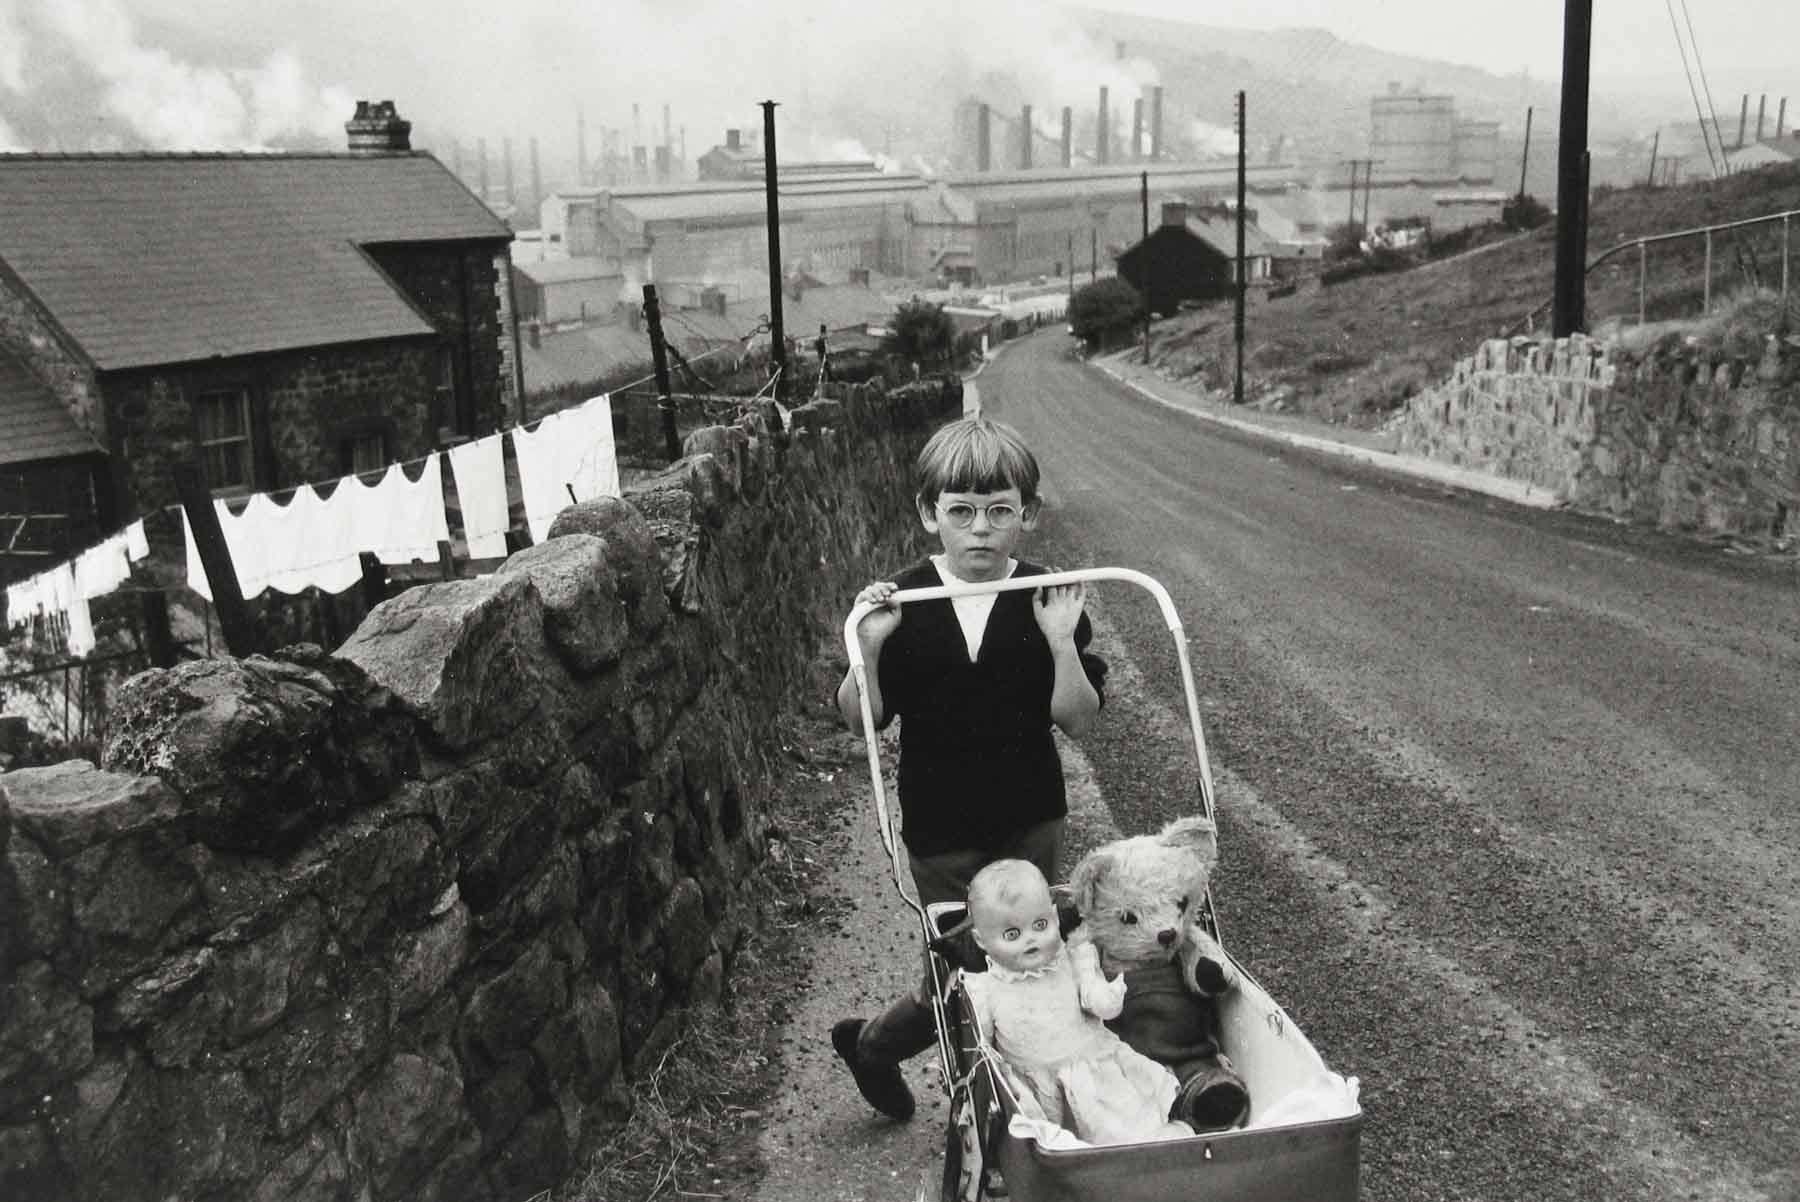 Bruce Davidson Wales, 1965